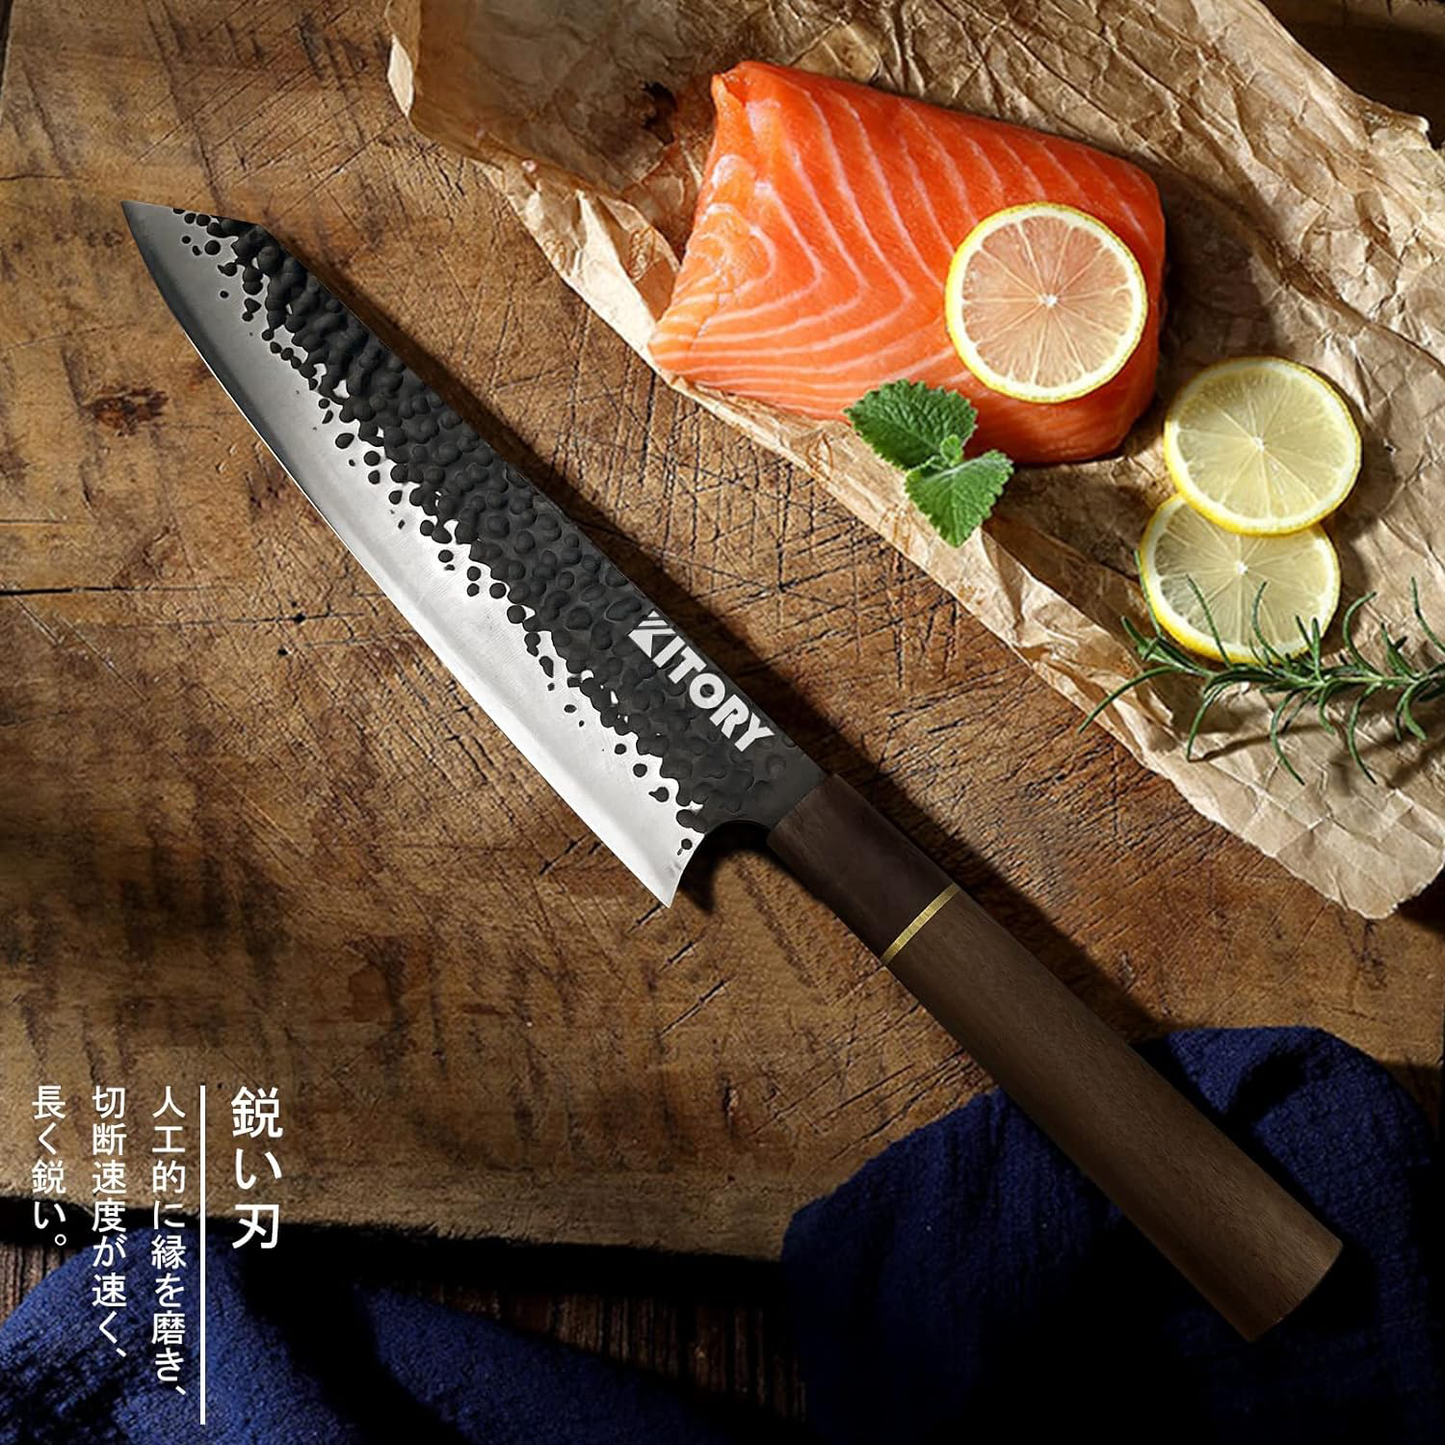 KD 8.5Inch Kiritsuke Chef Knife - Japanese Style with Gift Box